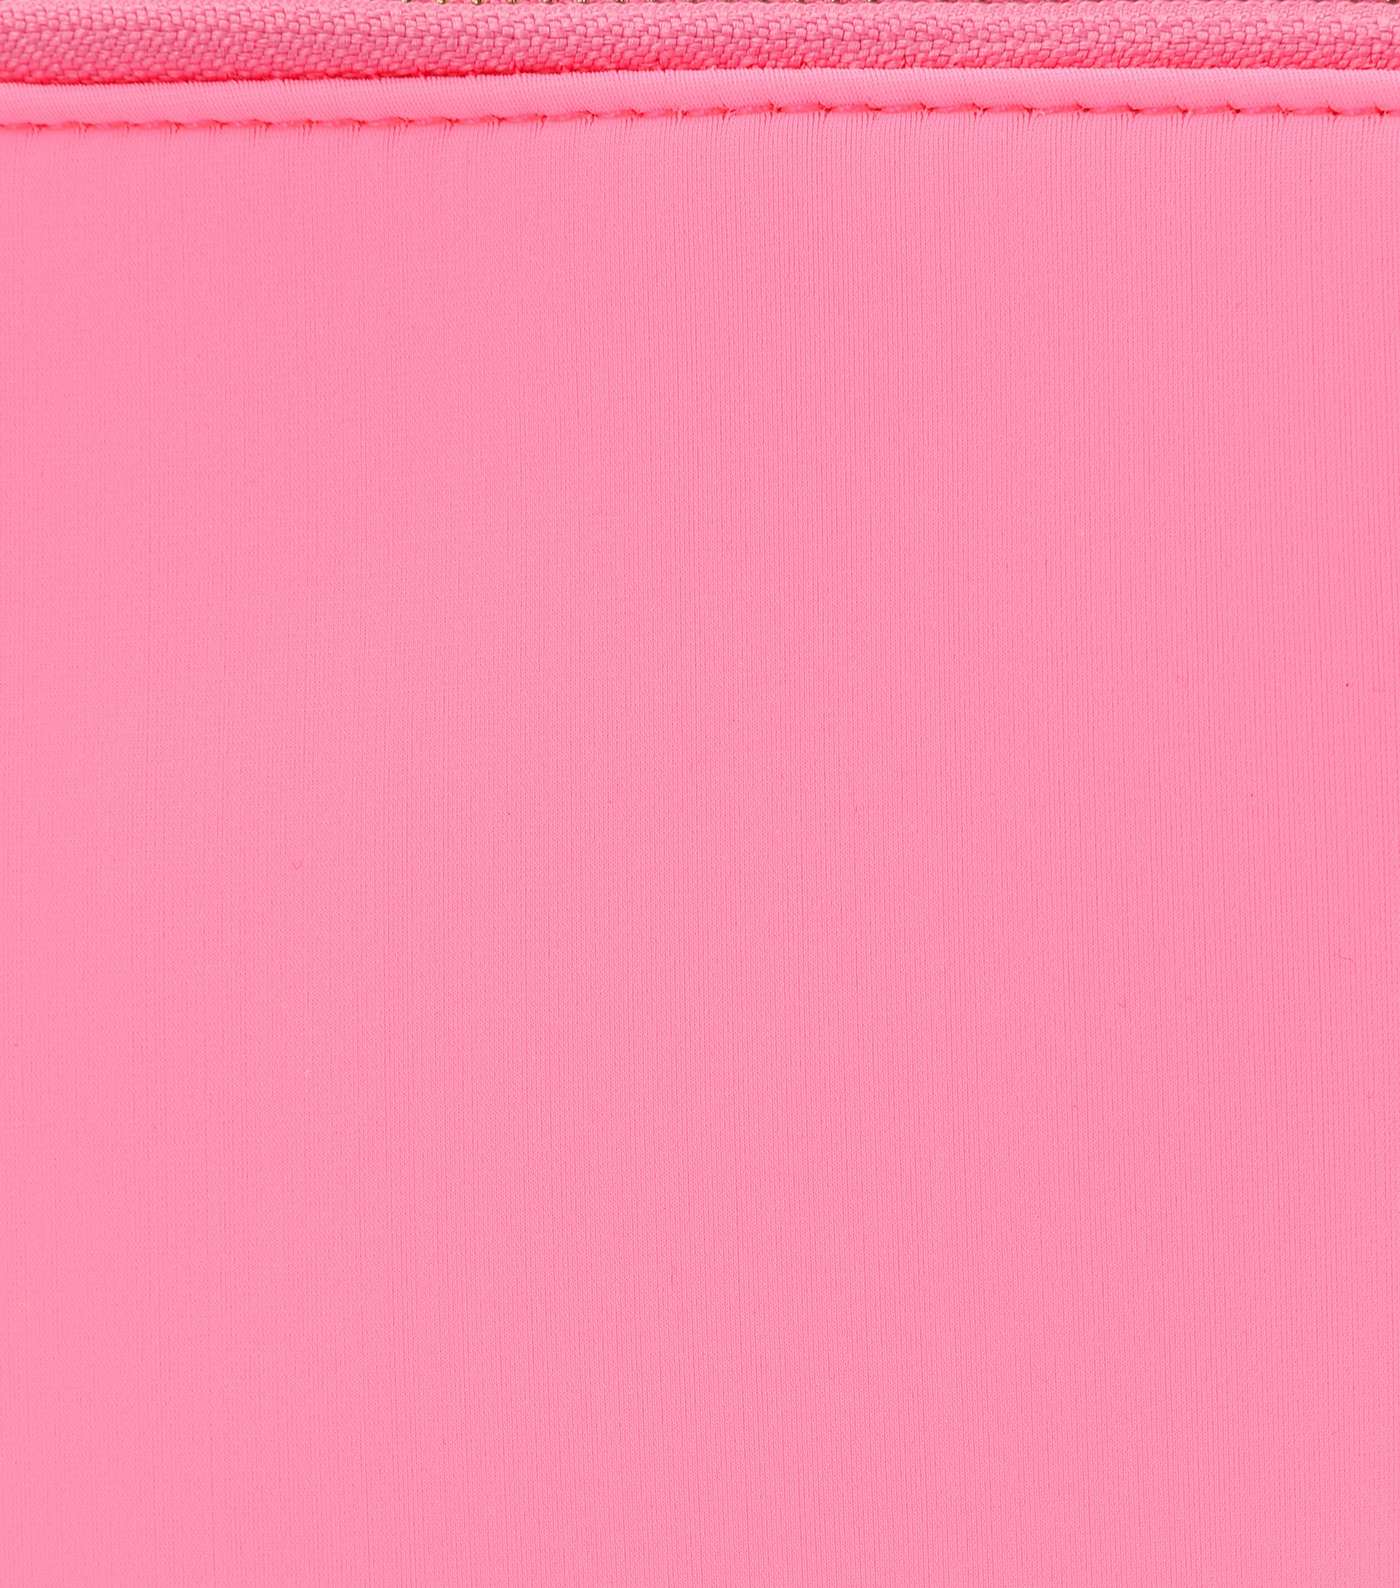 South Beach Bright Pink Wristlet Clutch Bag Image 3